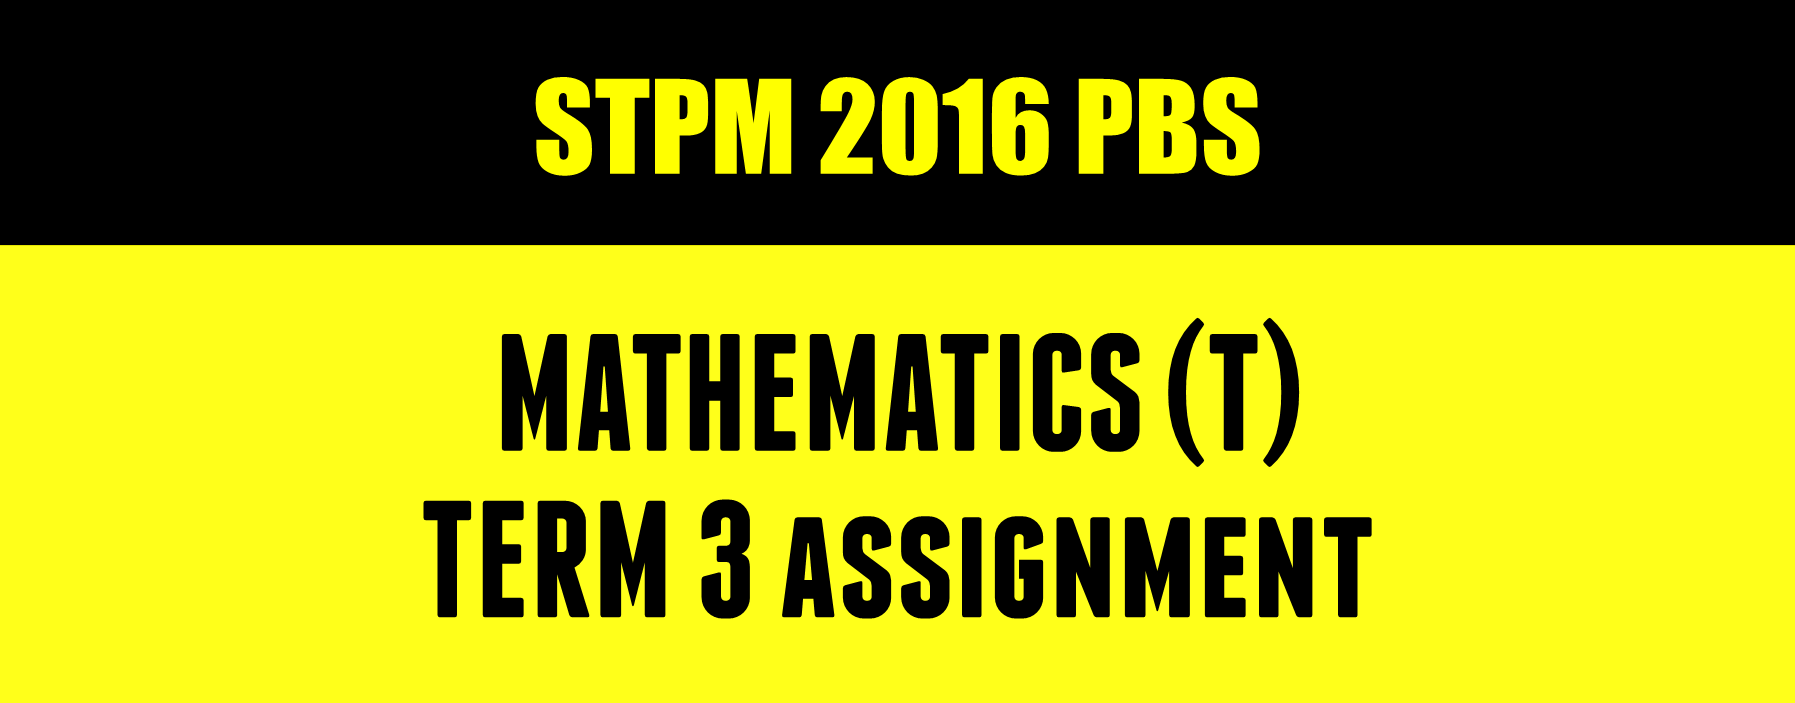 stpm mathematics t coursework 2016 assignment c